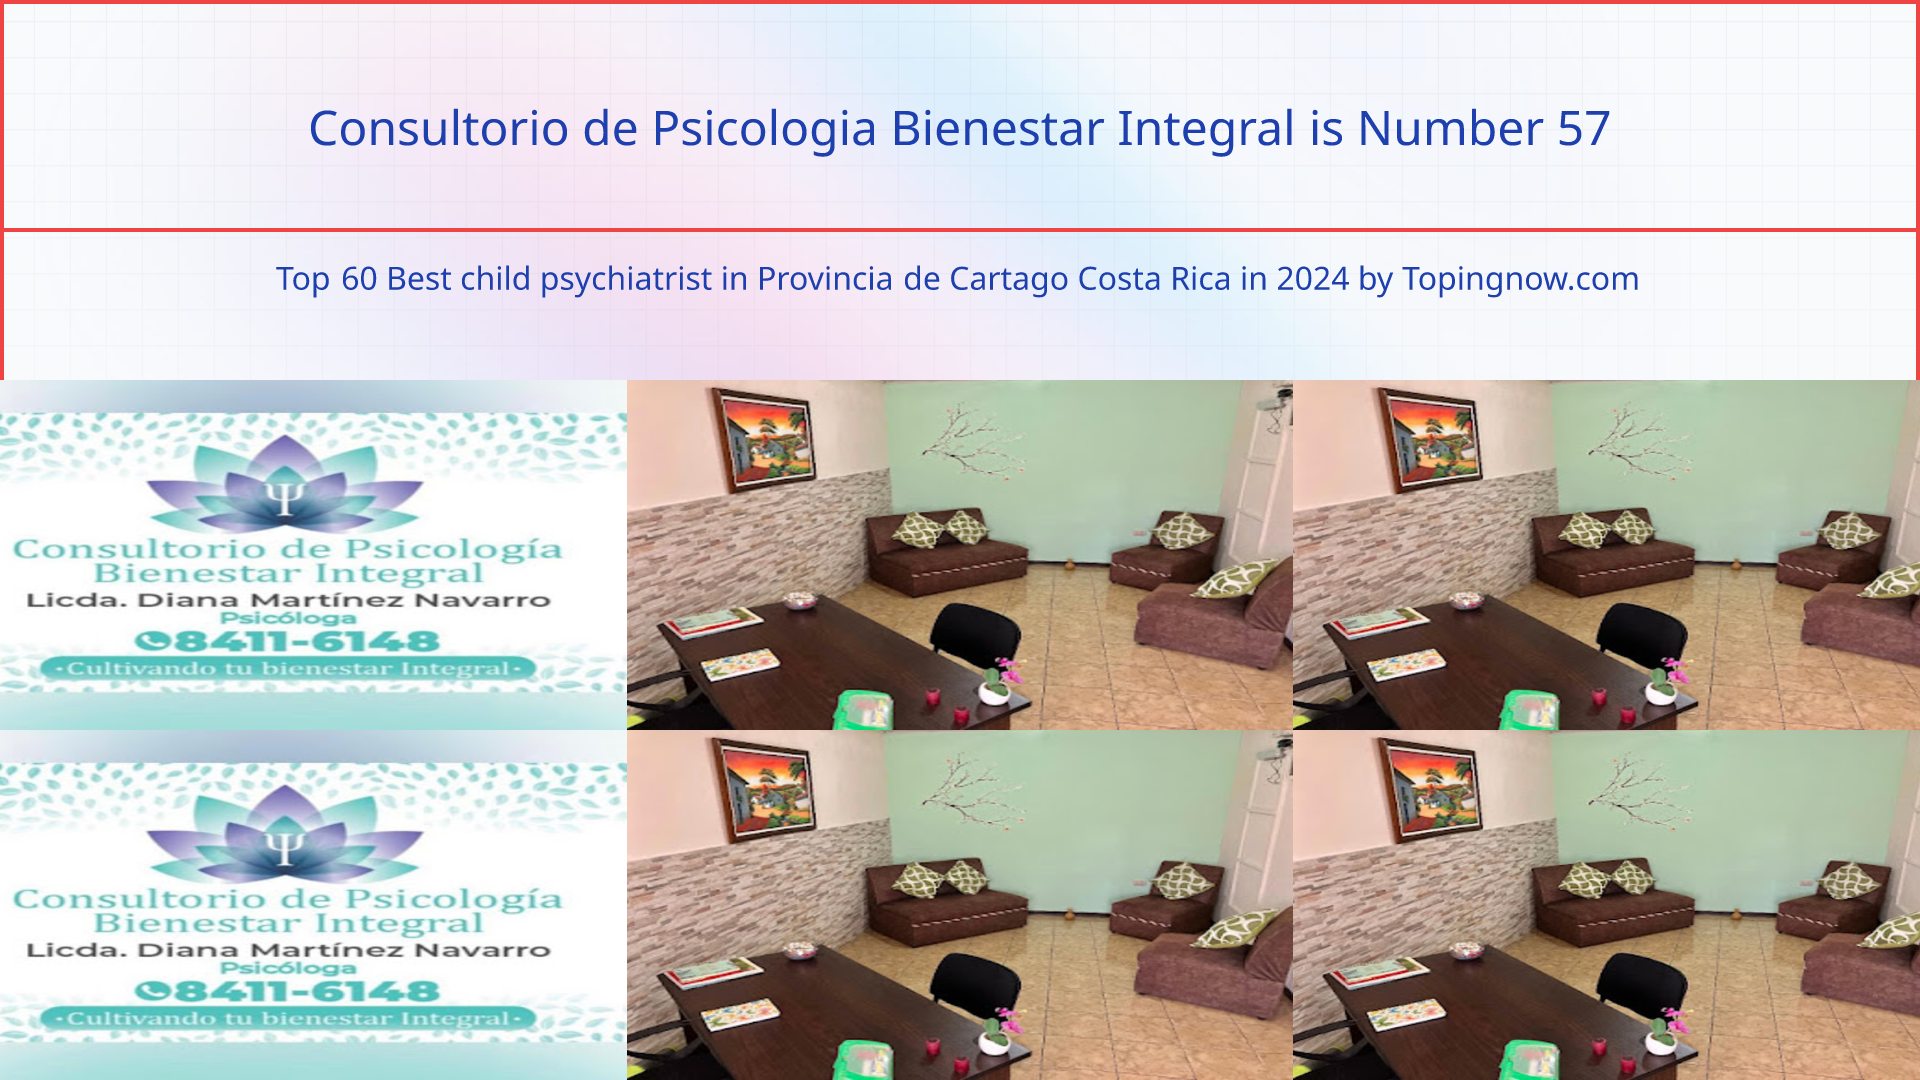 Consultorio de Psicologia Bienestar Integral: Top 60 Best child psychiatrist in Provincia de Cartago Costa Rica in 2024